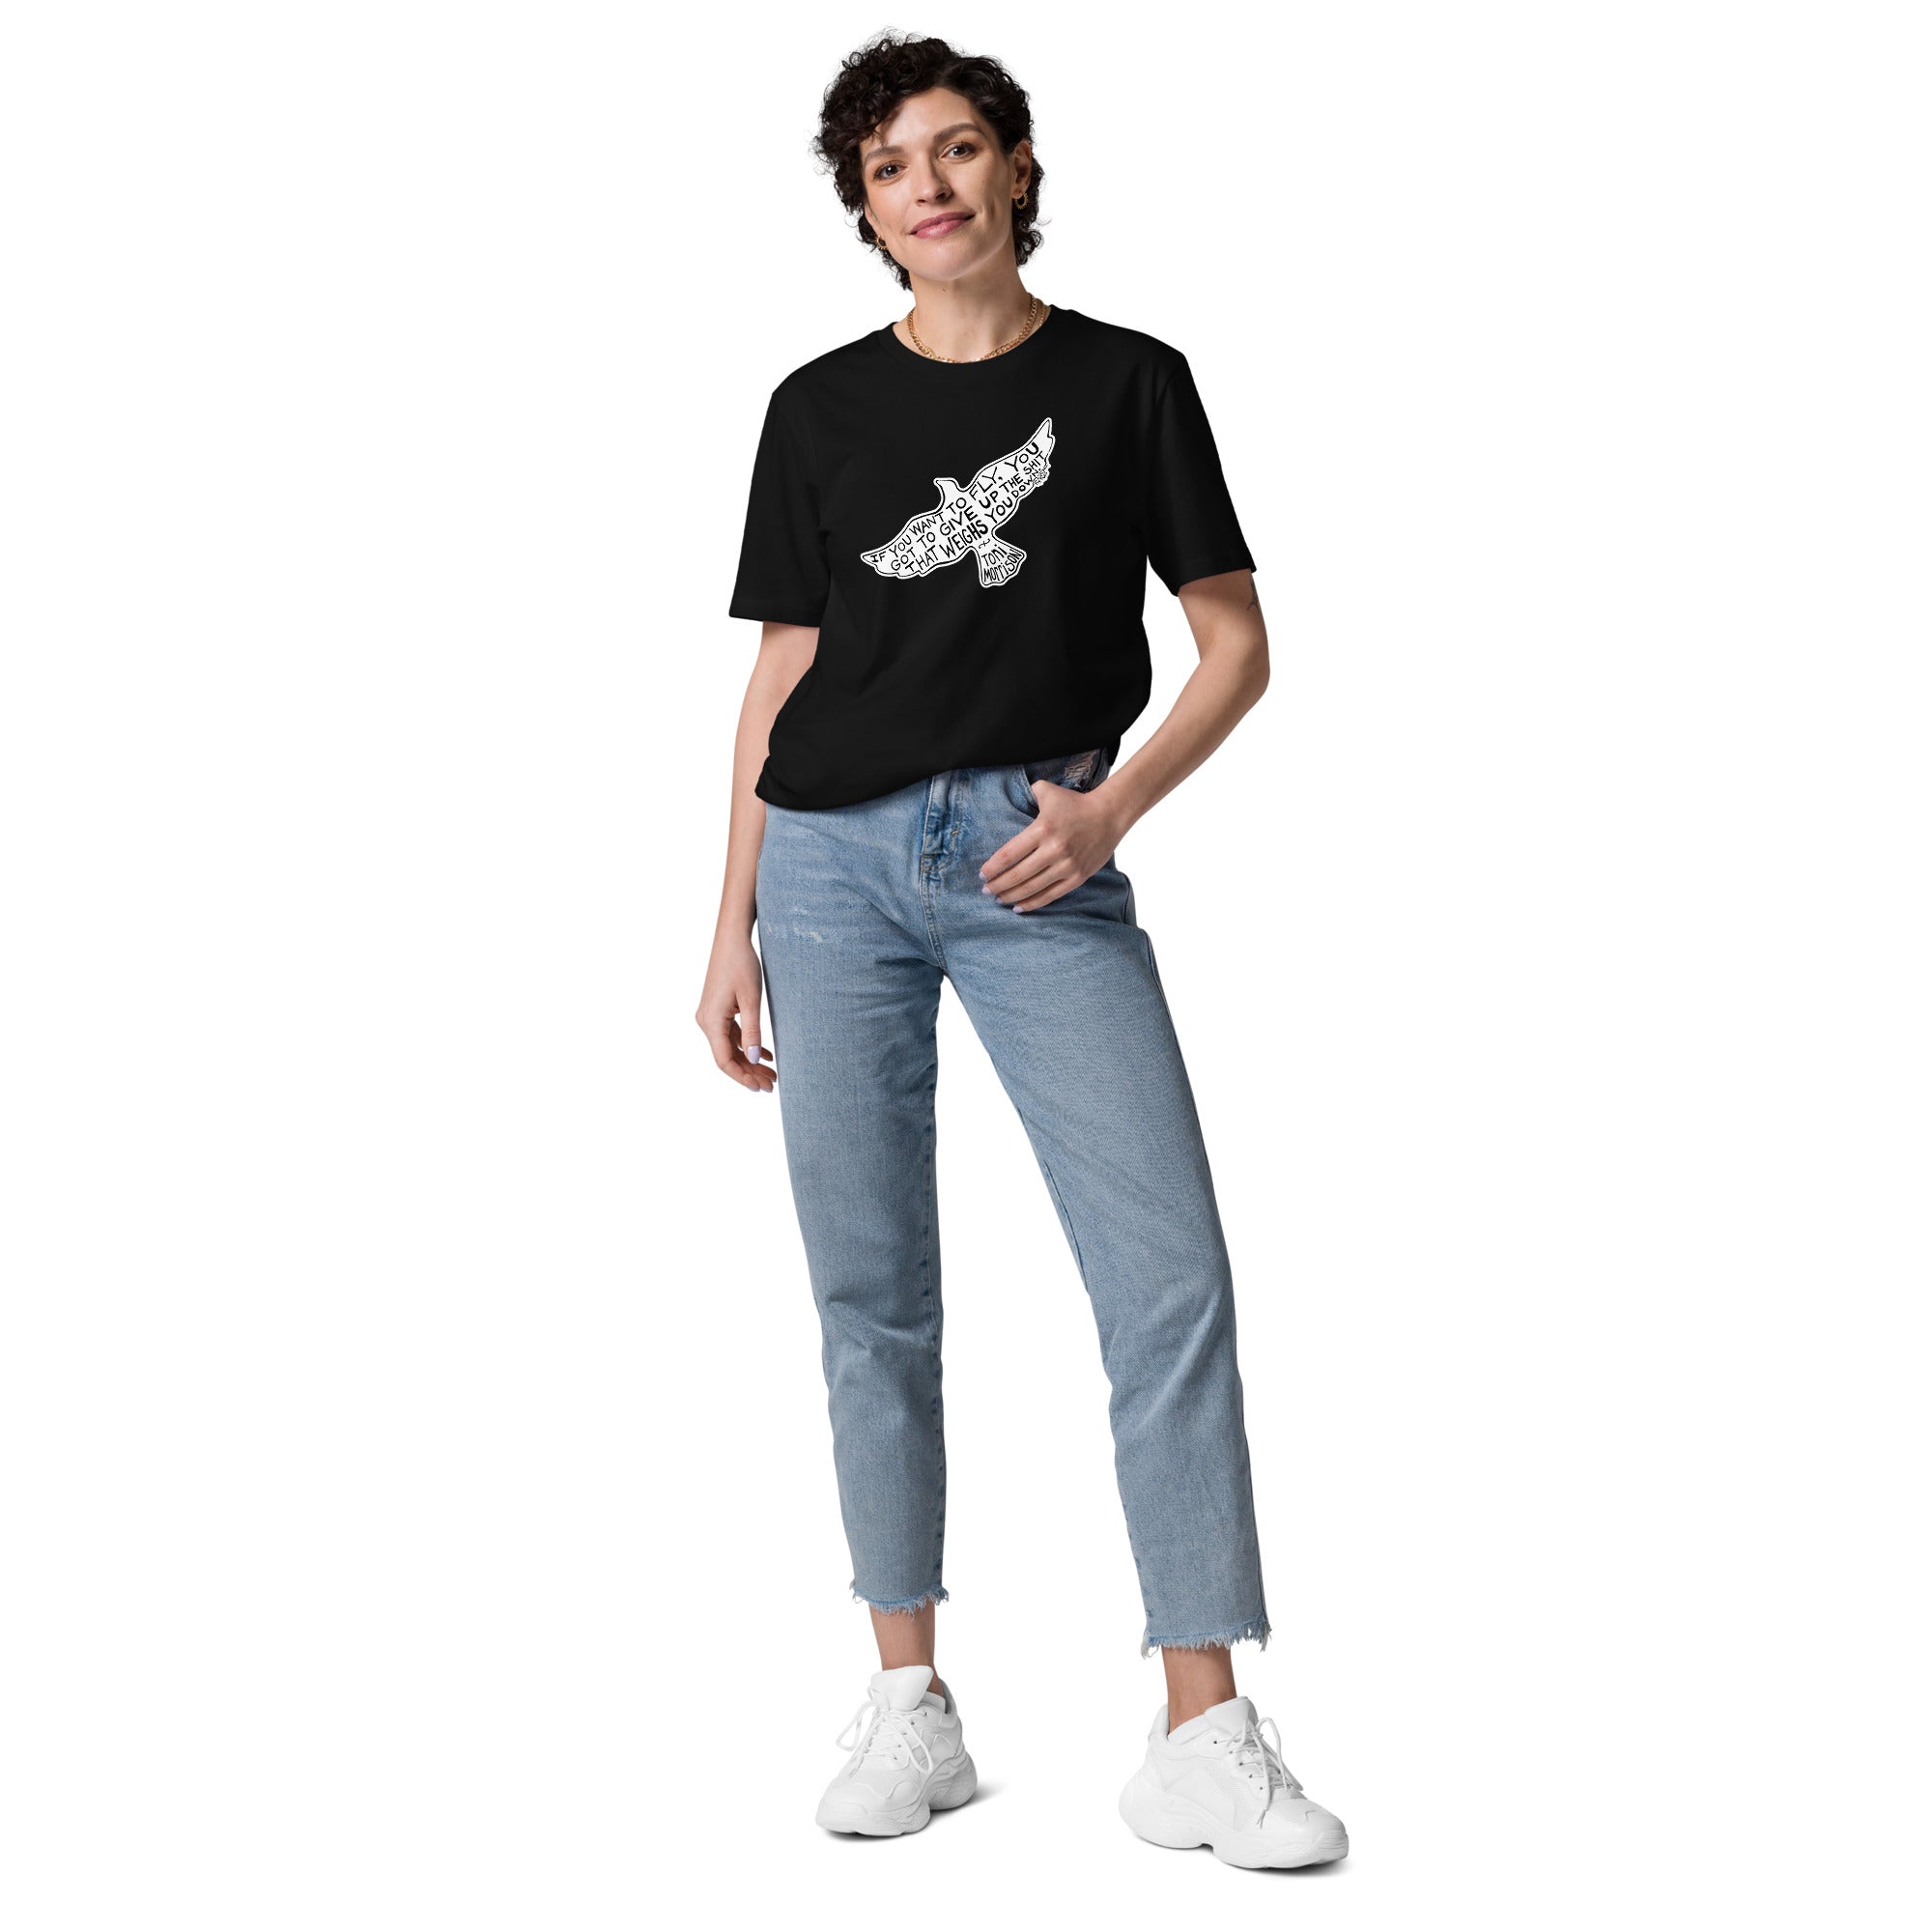 Toni Morrison Organic Cotton Gender-Neutral Crew Neck T-Shirt In Black By Artist Rick Frausto